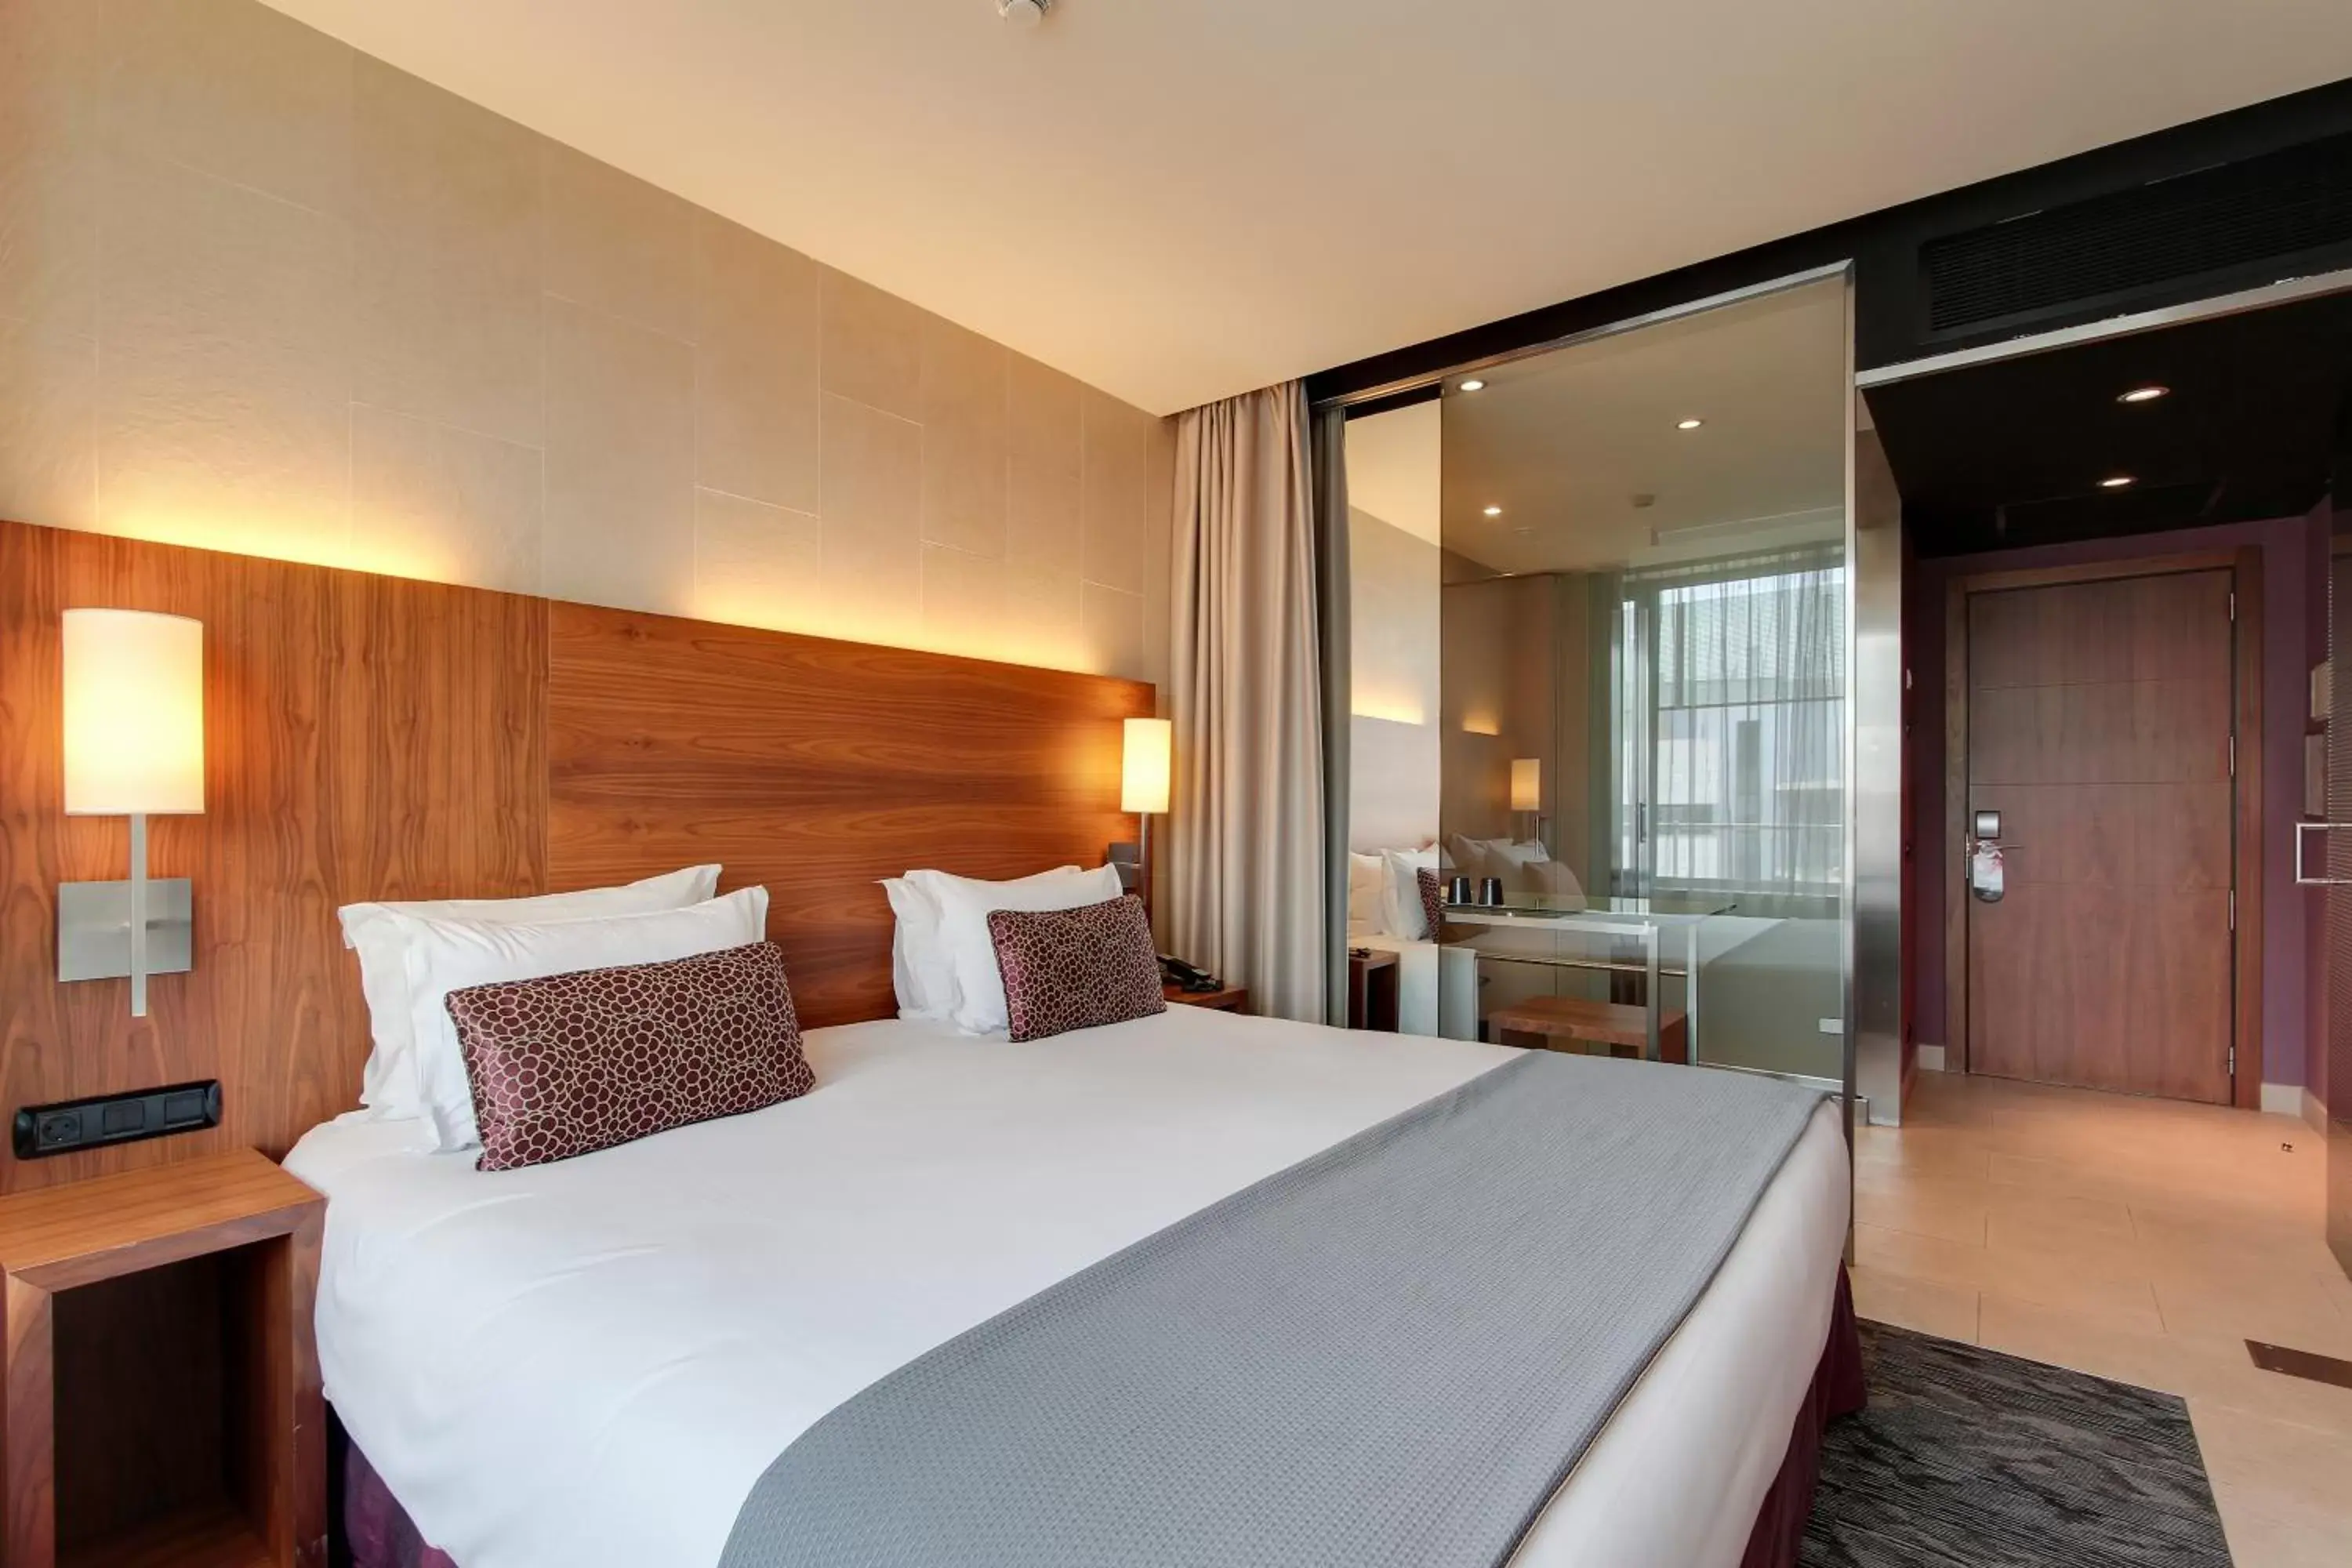 Bed, Room Photo in Hotel Badalona Tower